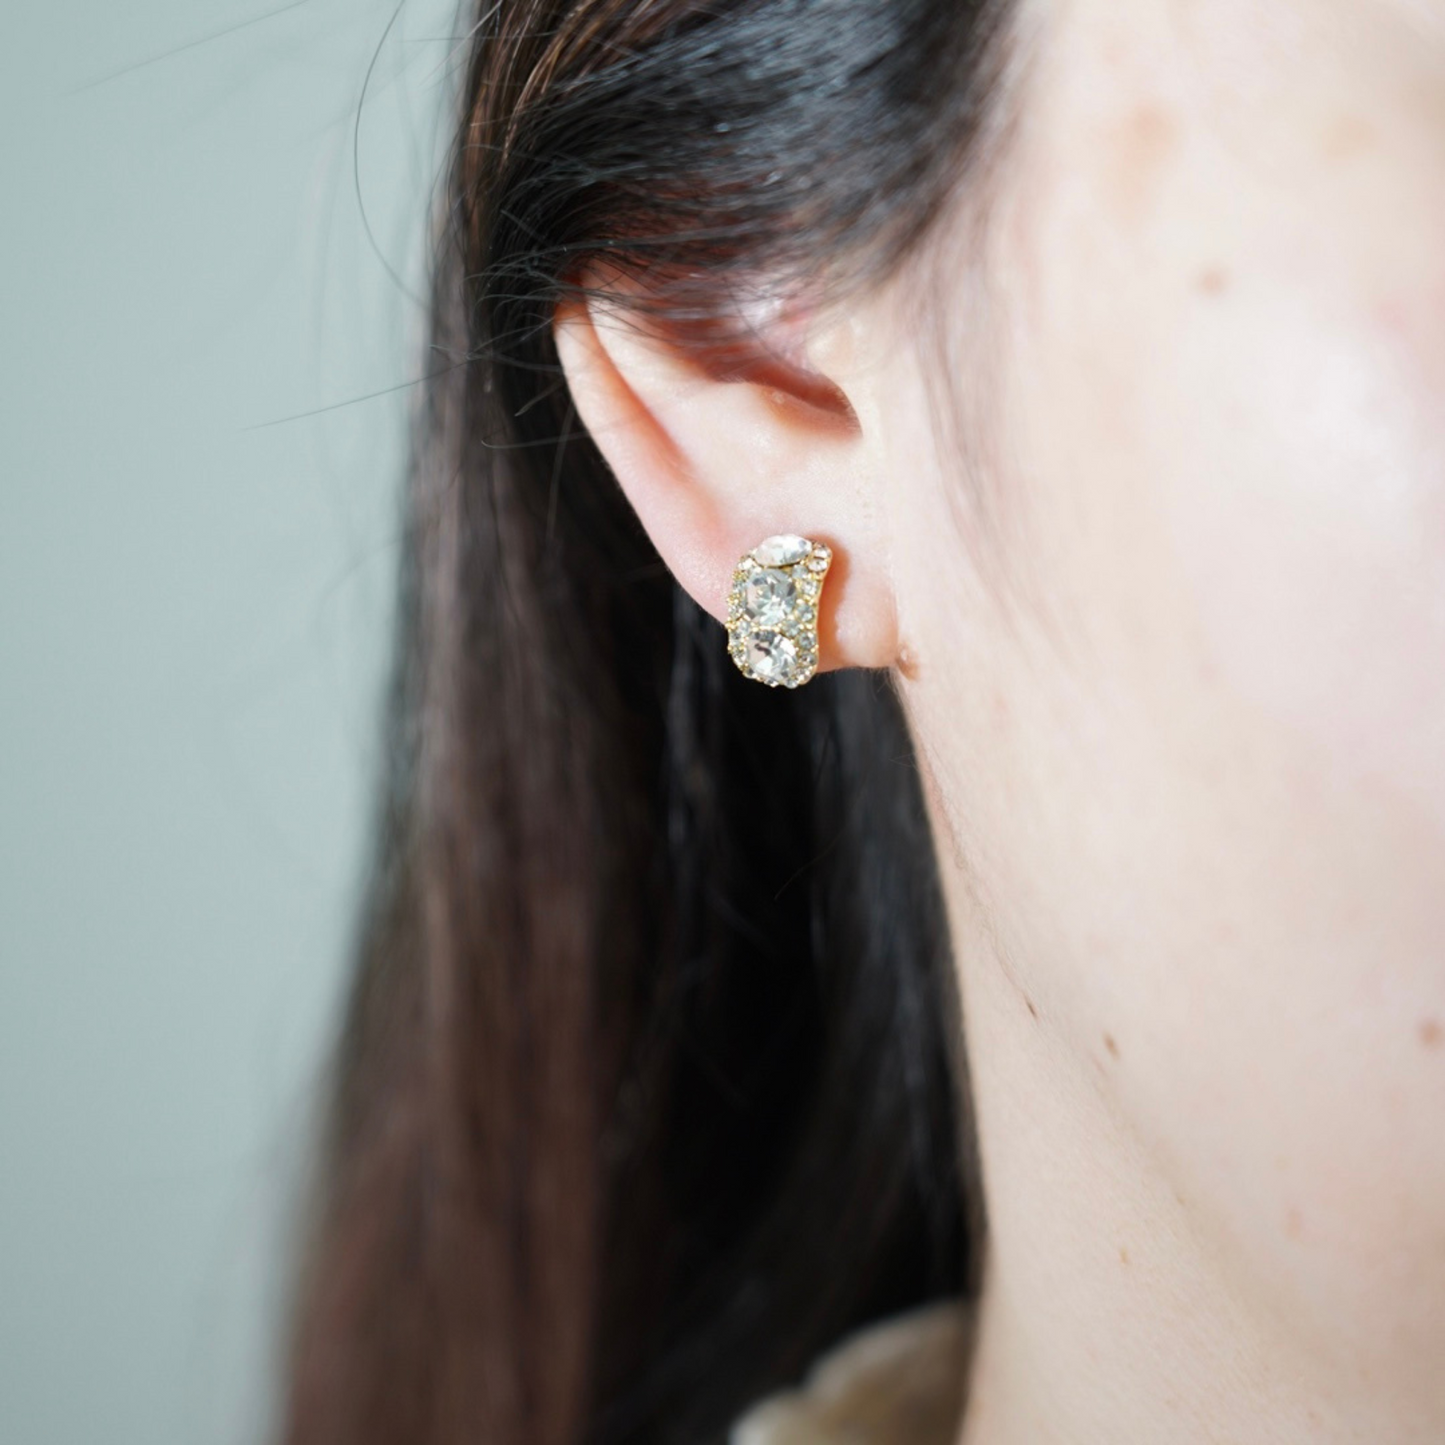 Minimalist Vintage Style Gold Diamond Clip On Earrings, Green & White